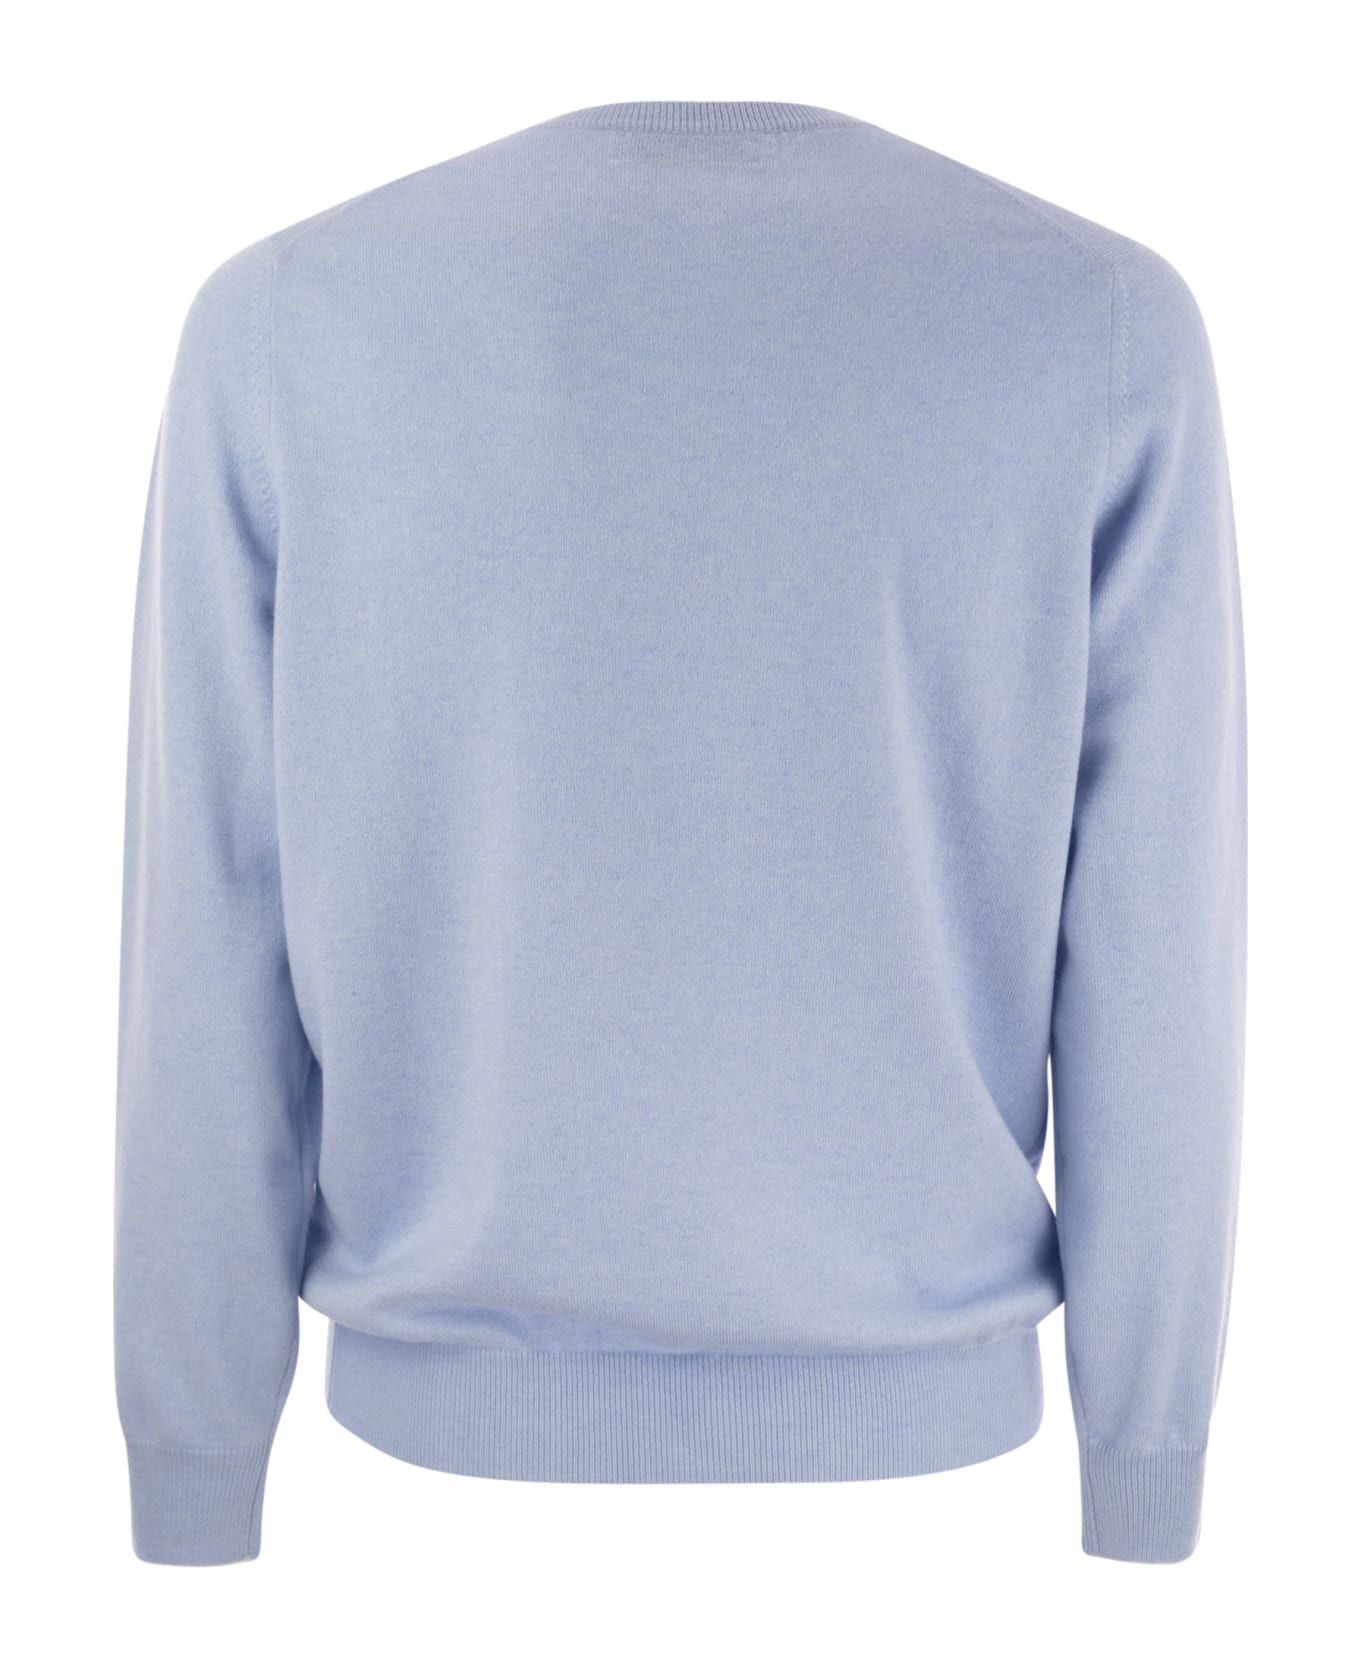 Brunello Cucinelli Cashmere Crew-neck Sweater - Light Blue